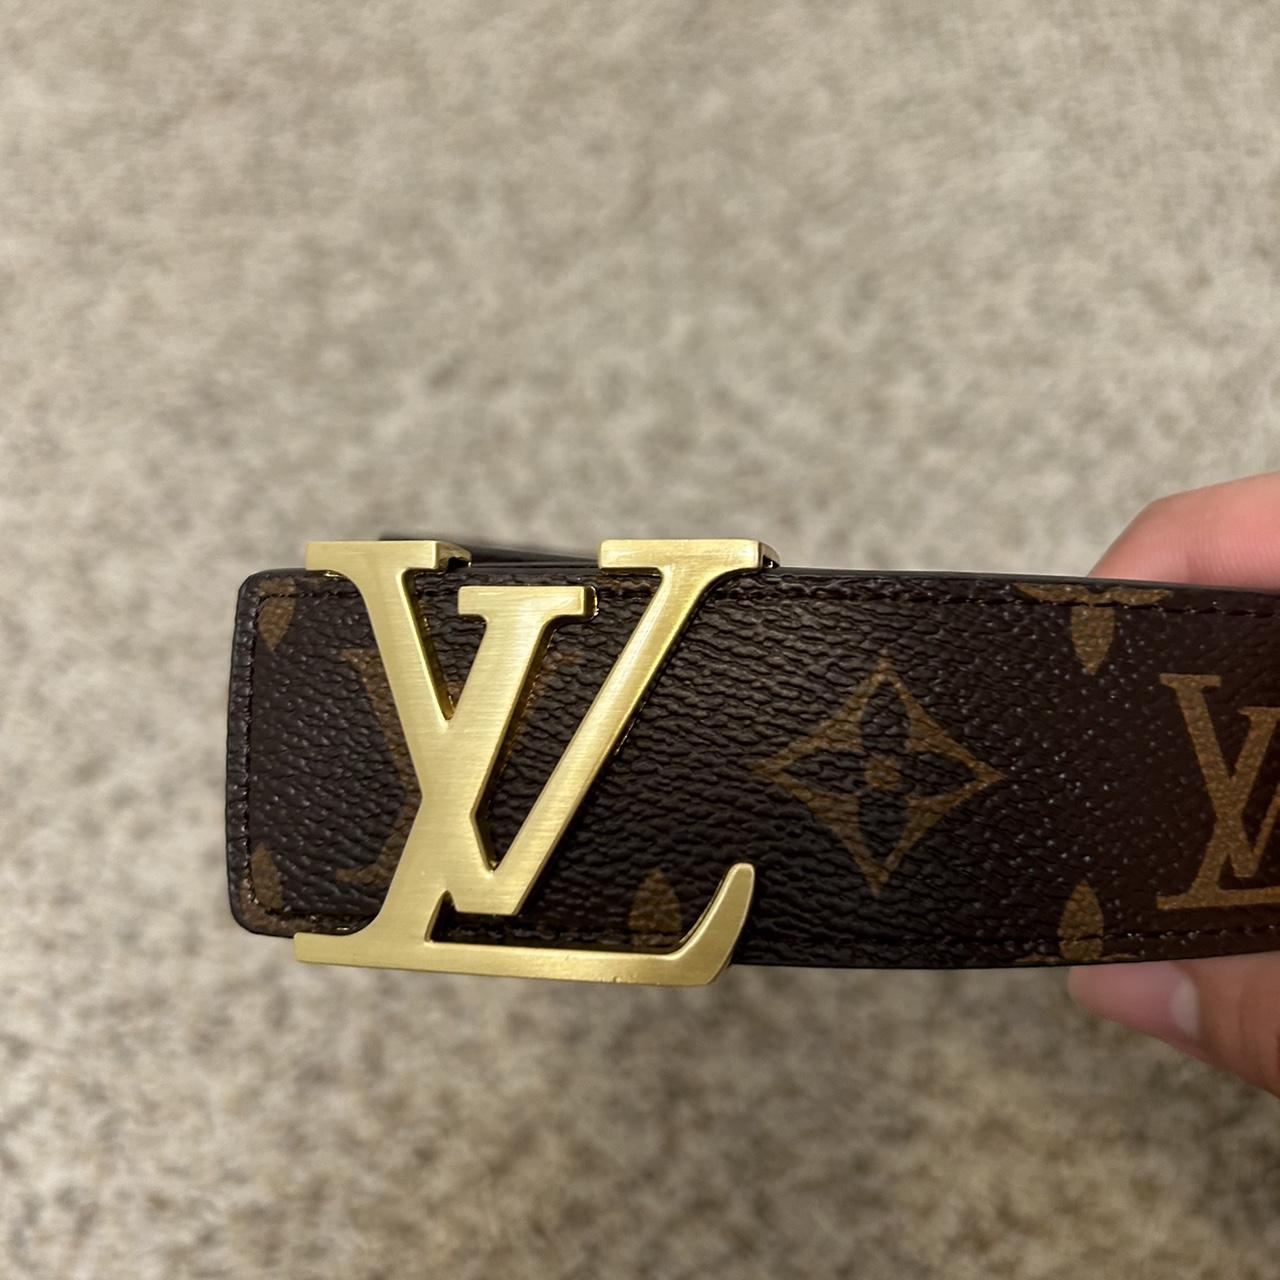 Louis Vuitton Belt; Brown and Gold Buckle Monogram - Depop